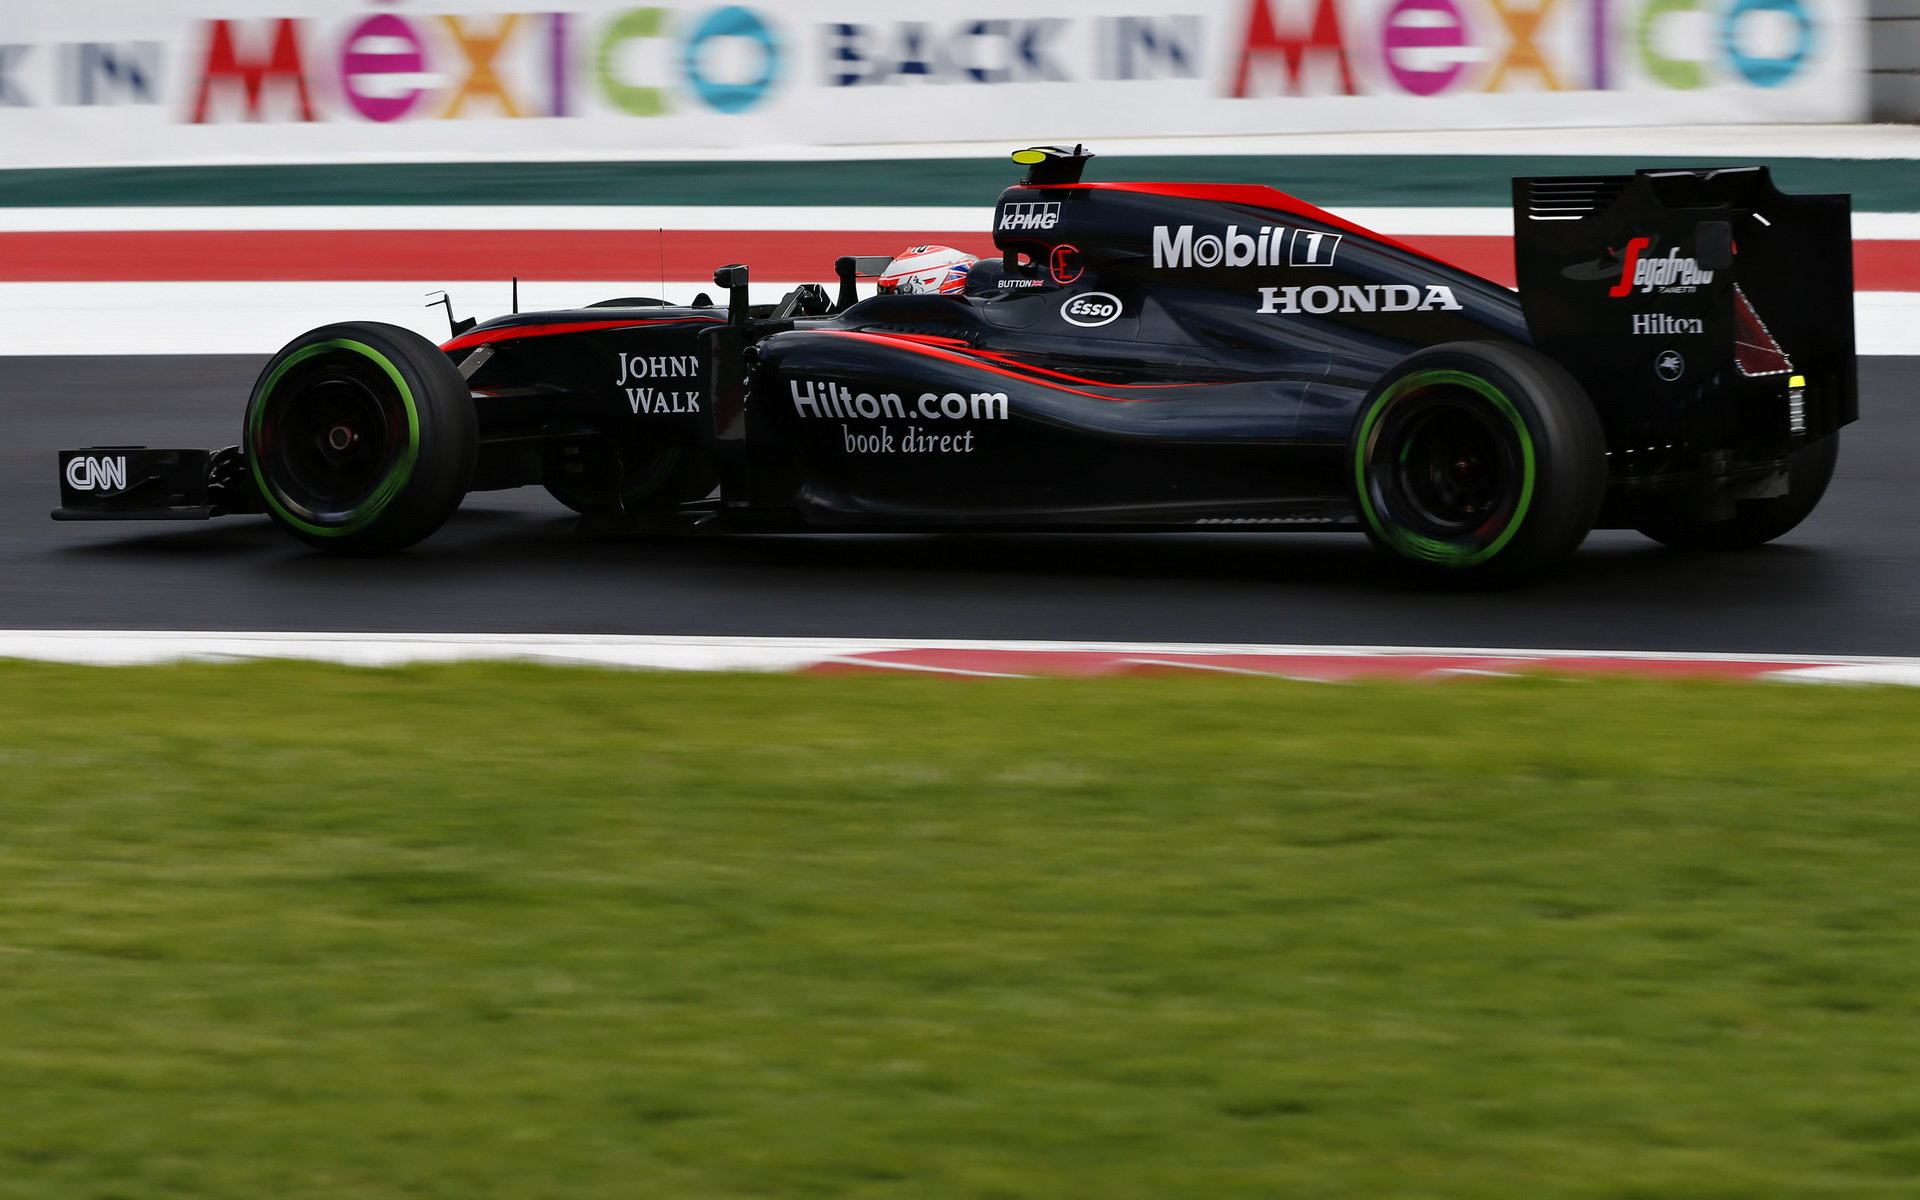 Jenson Button v Mexiku